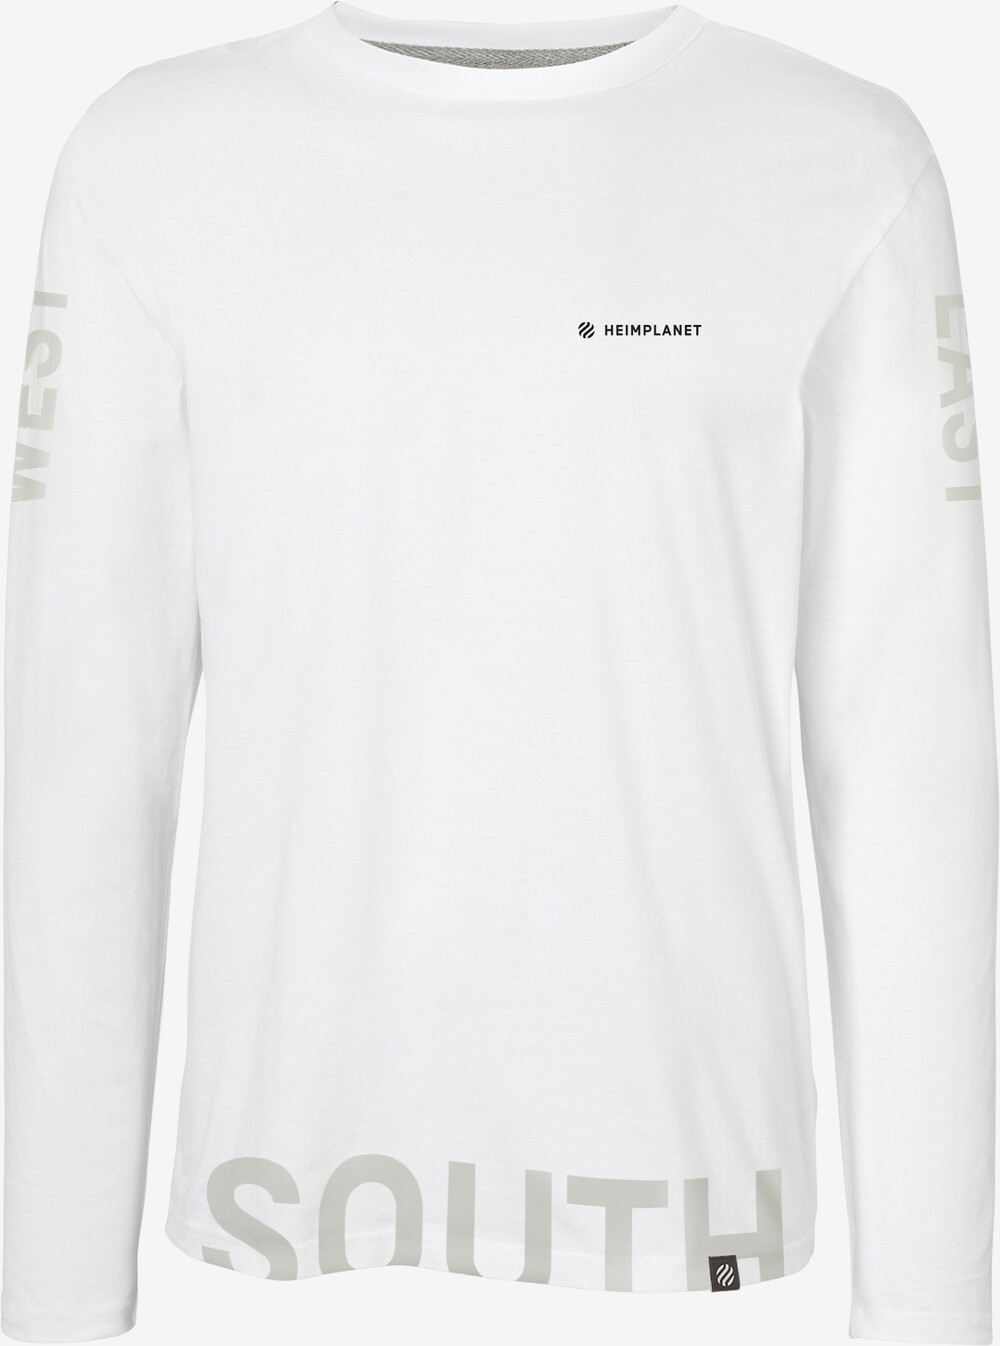 Heimplanet - Apparel langærmet t-shirt (Hvid) - M